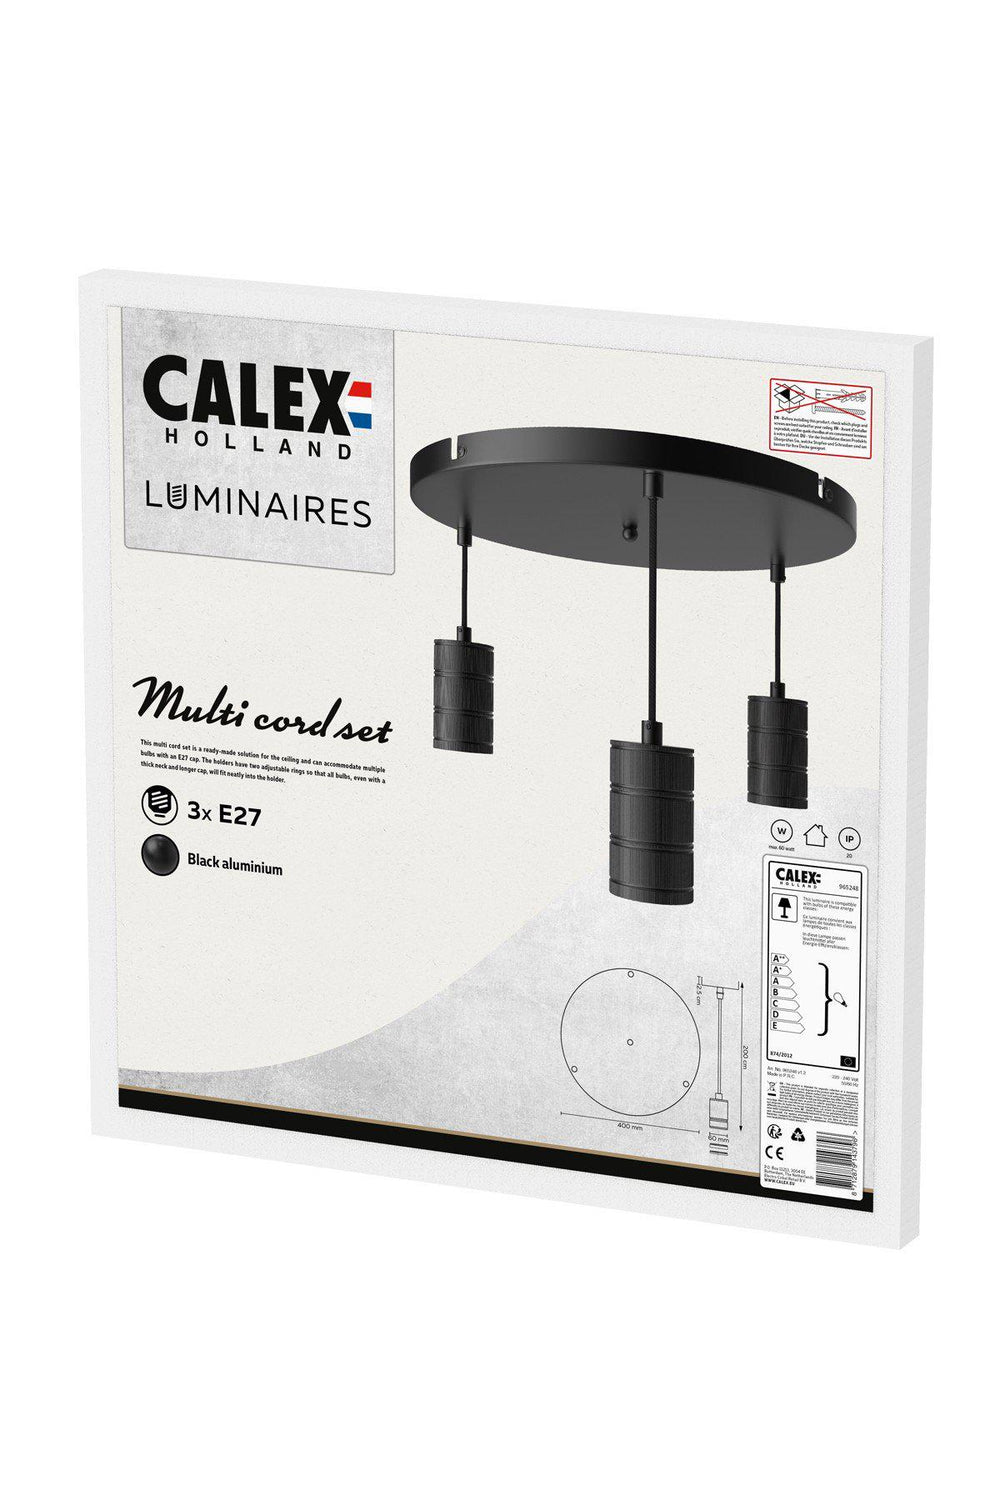 Calex Multi Cordset 3x E27 Industrial Black - 965248